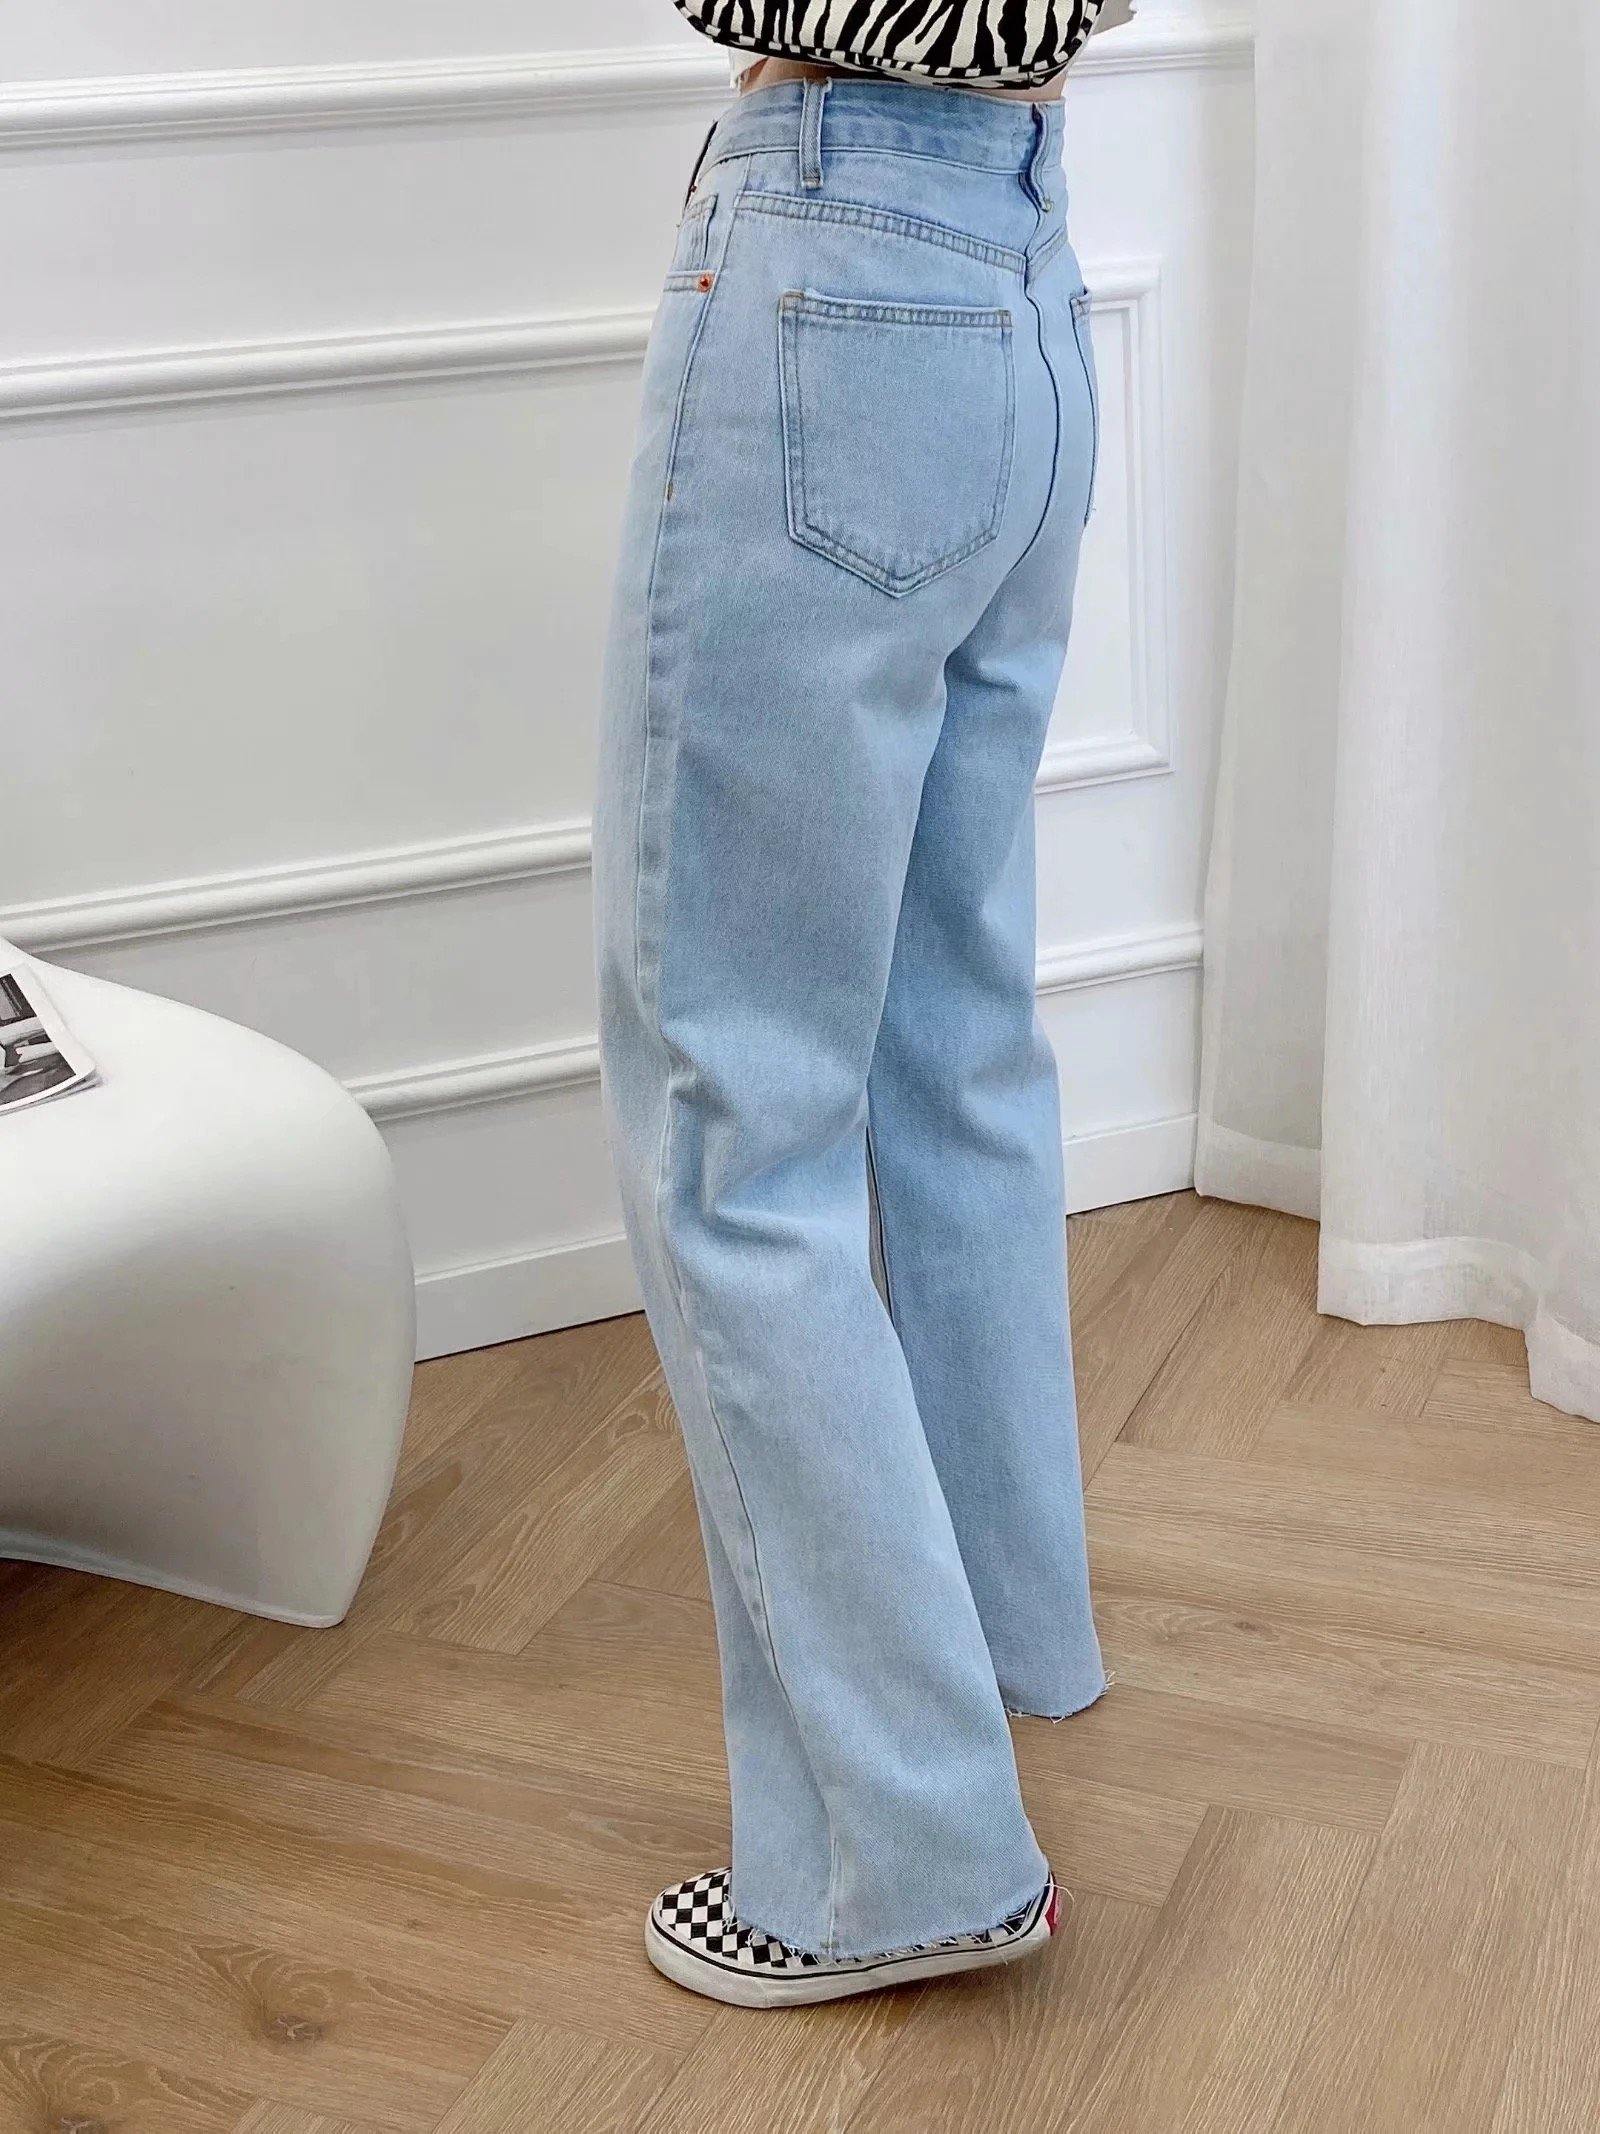 June Streetstyle Jeans - Label Frenesi Fashion